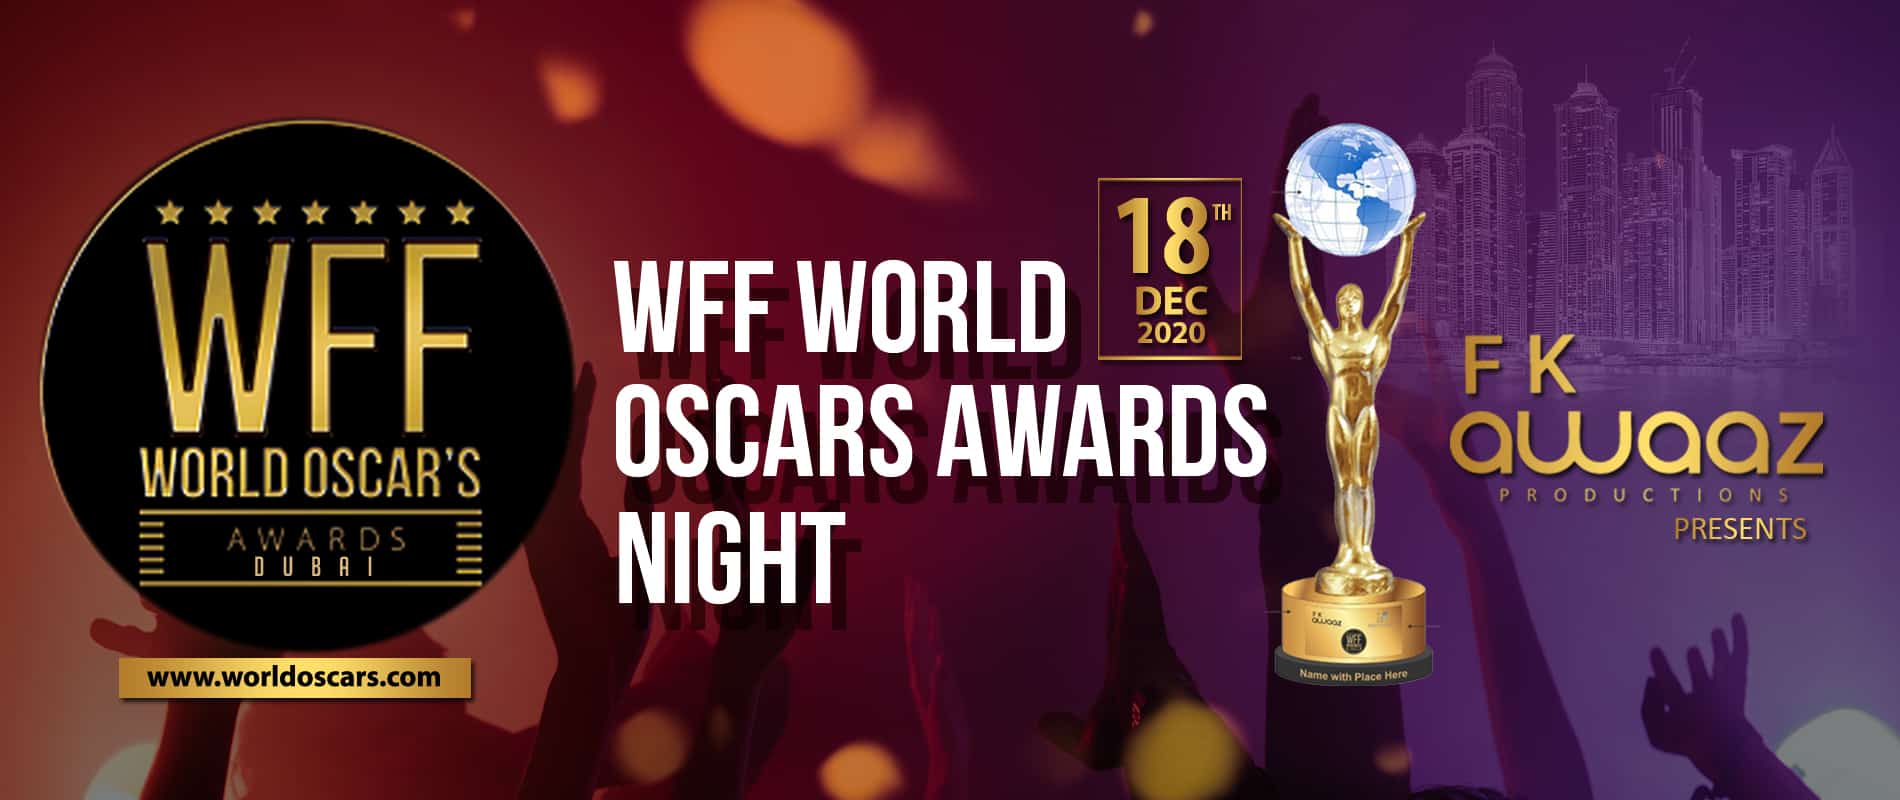 Awards night – The WFF World Oscars - Coming Soon in UAE